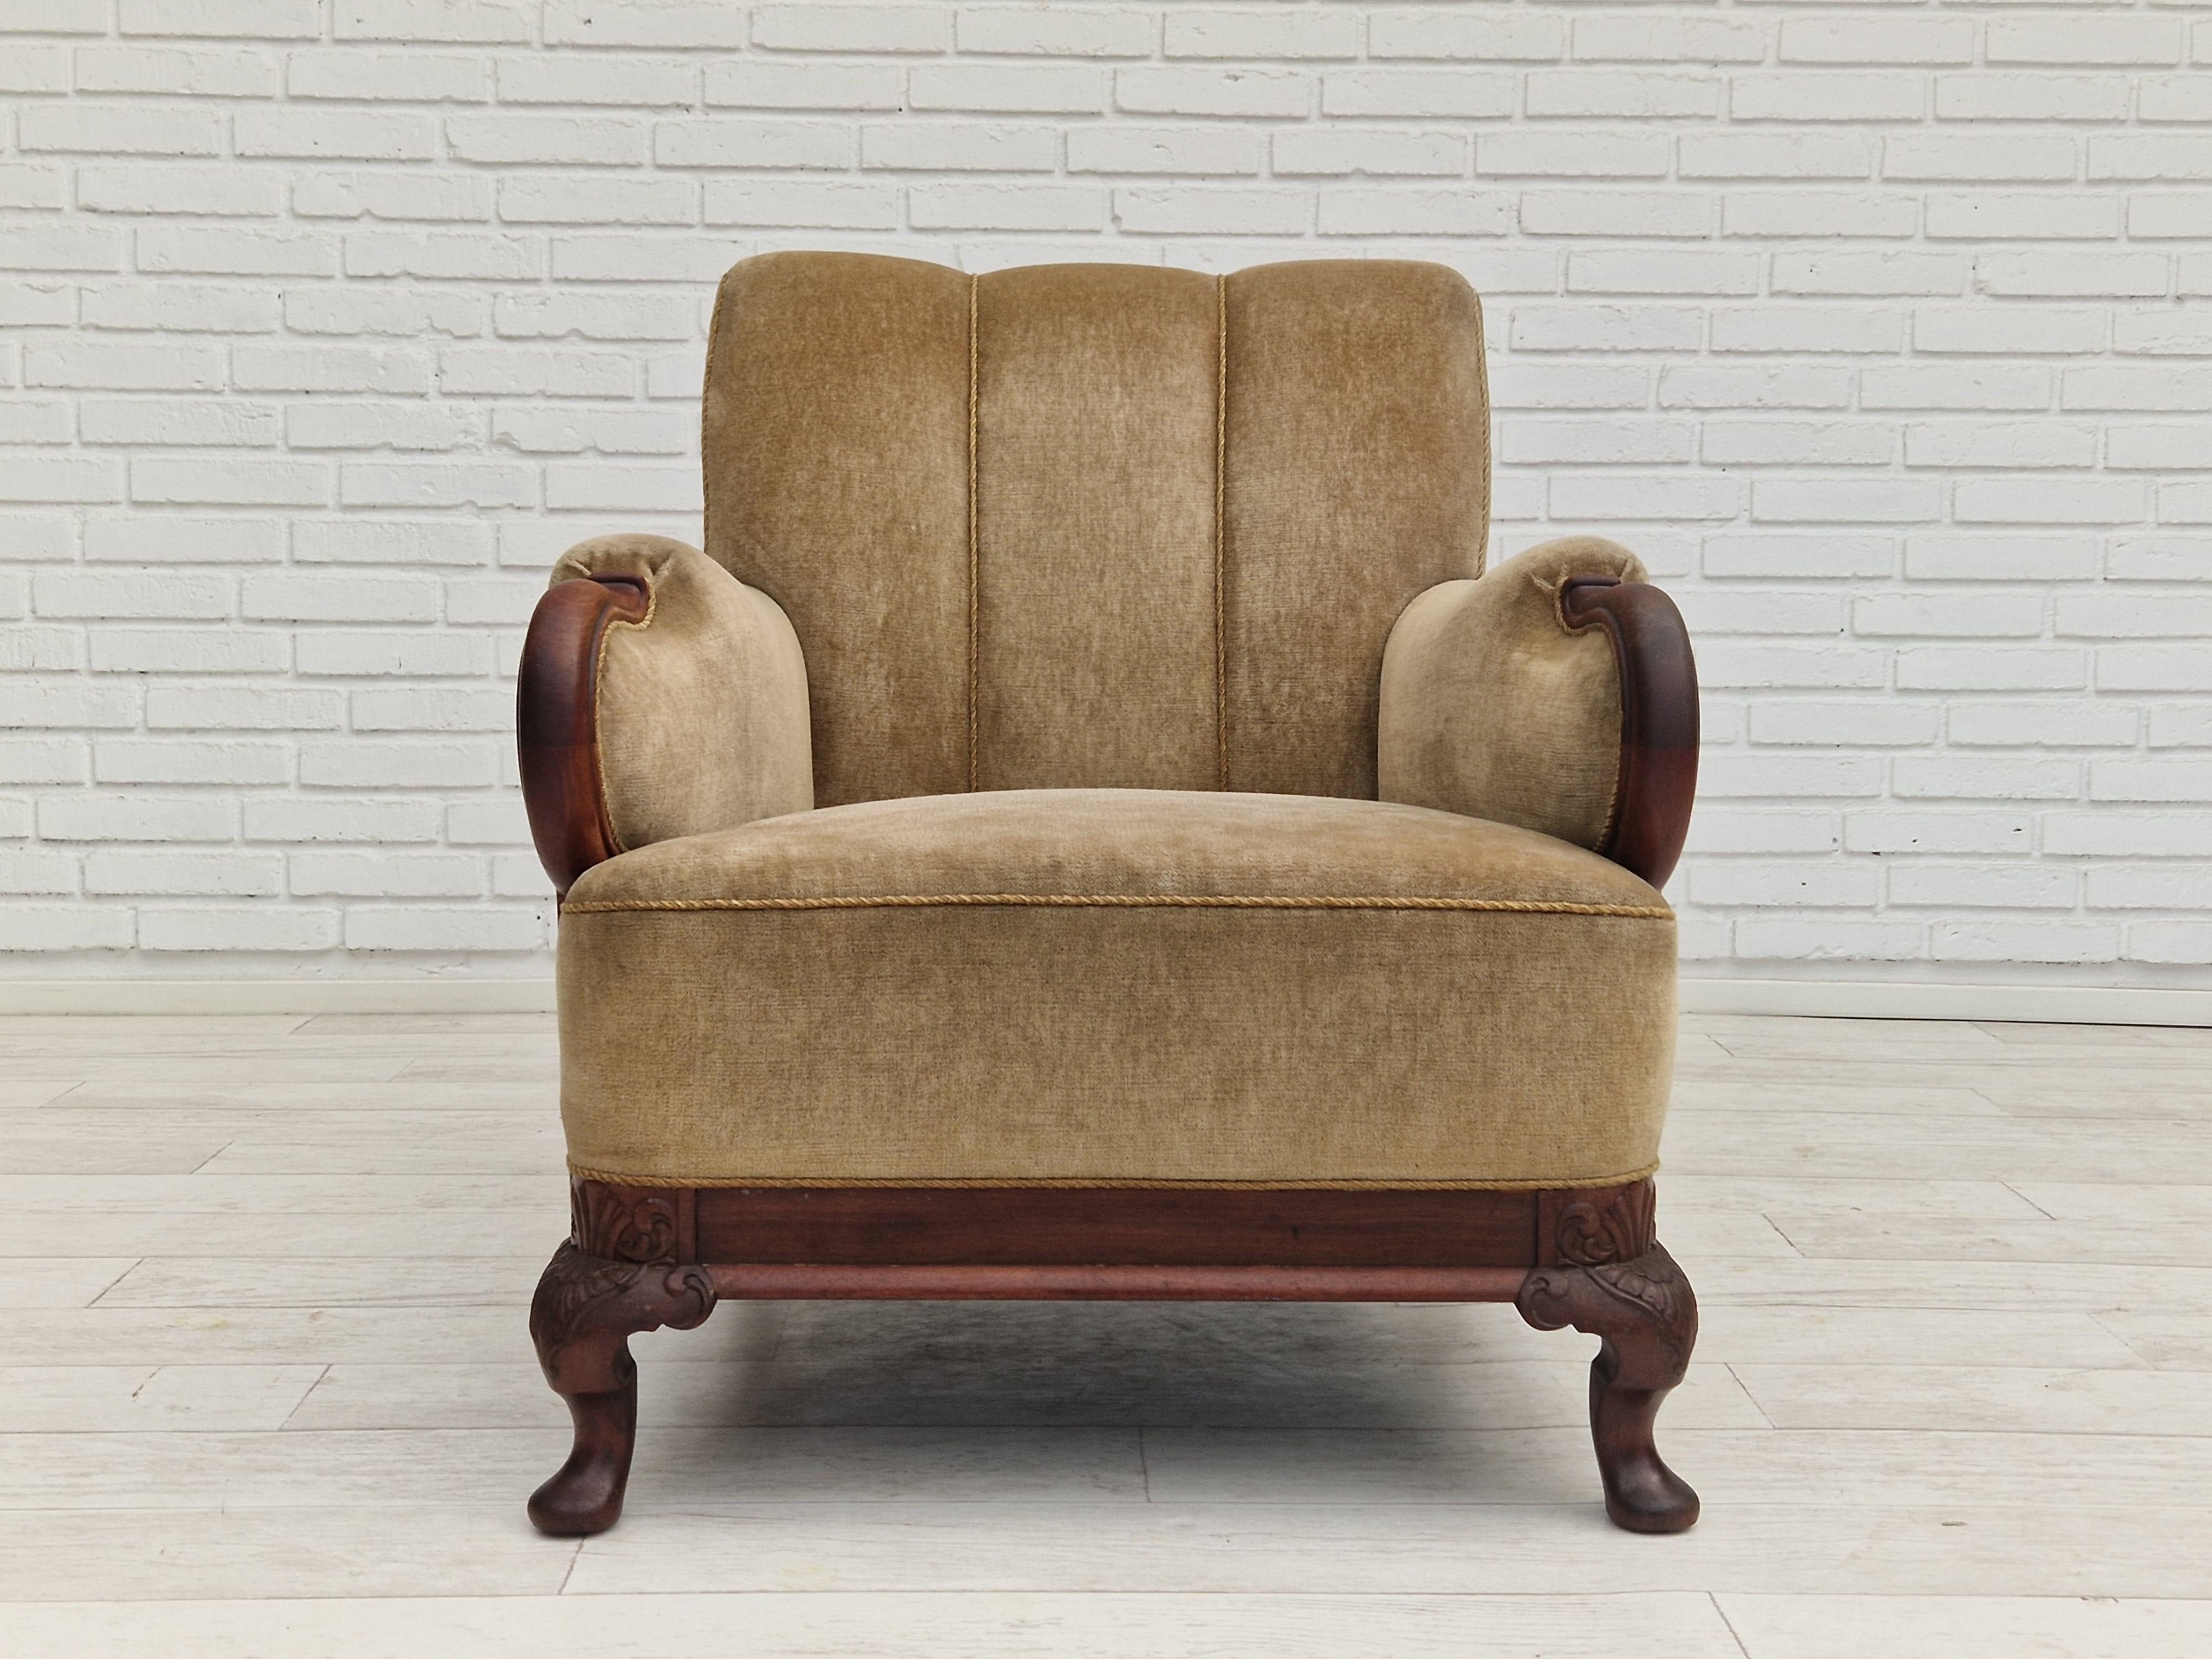 1950s, Danish Design, Set of Armchairs, Teak Wood, Velour, Original Condition For Sale 2